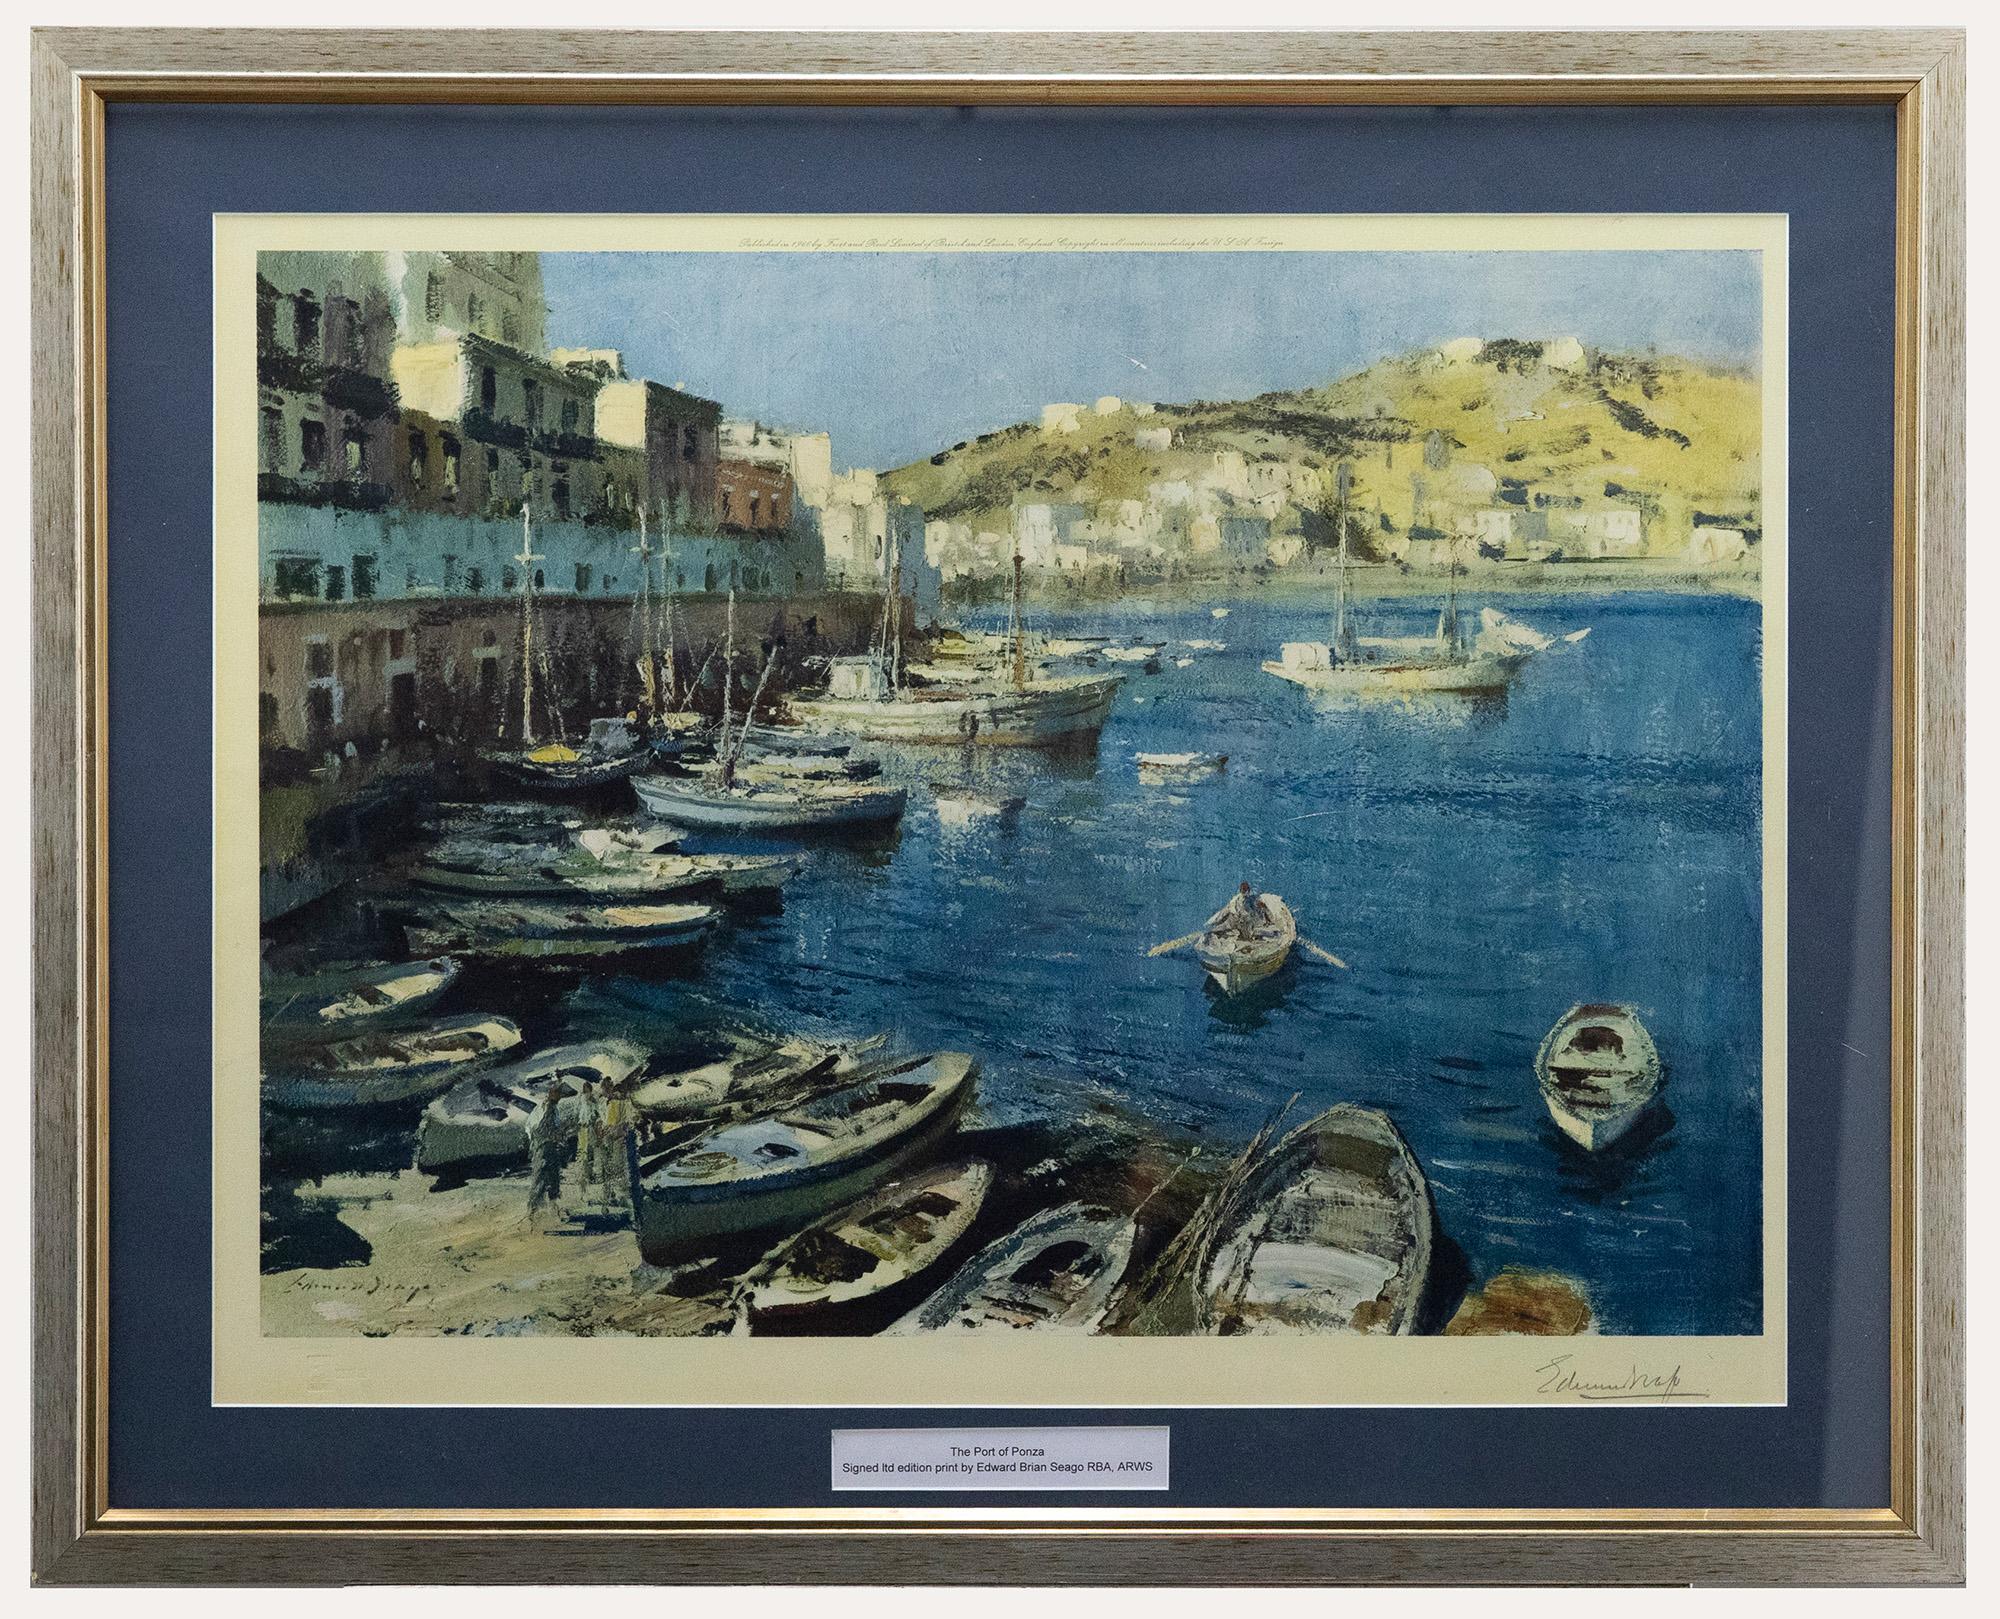 Unknown Figurative Print - Edward Brian Seago (1910-1974) - Framed Lithograph, The Port of Ponza